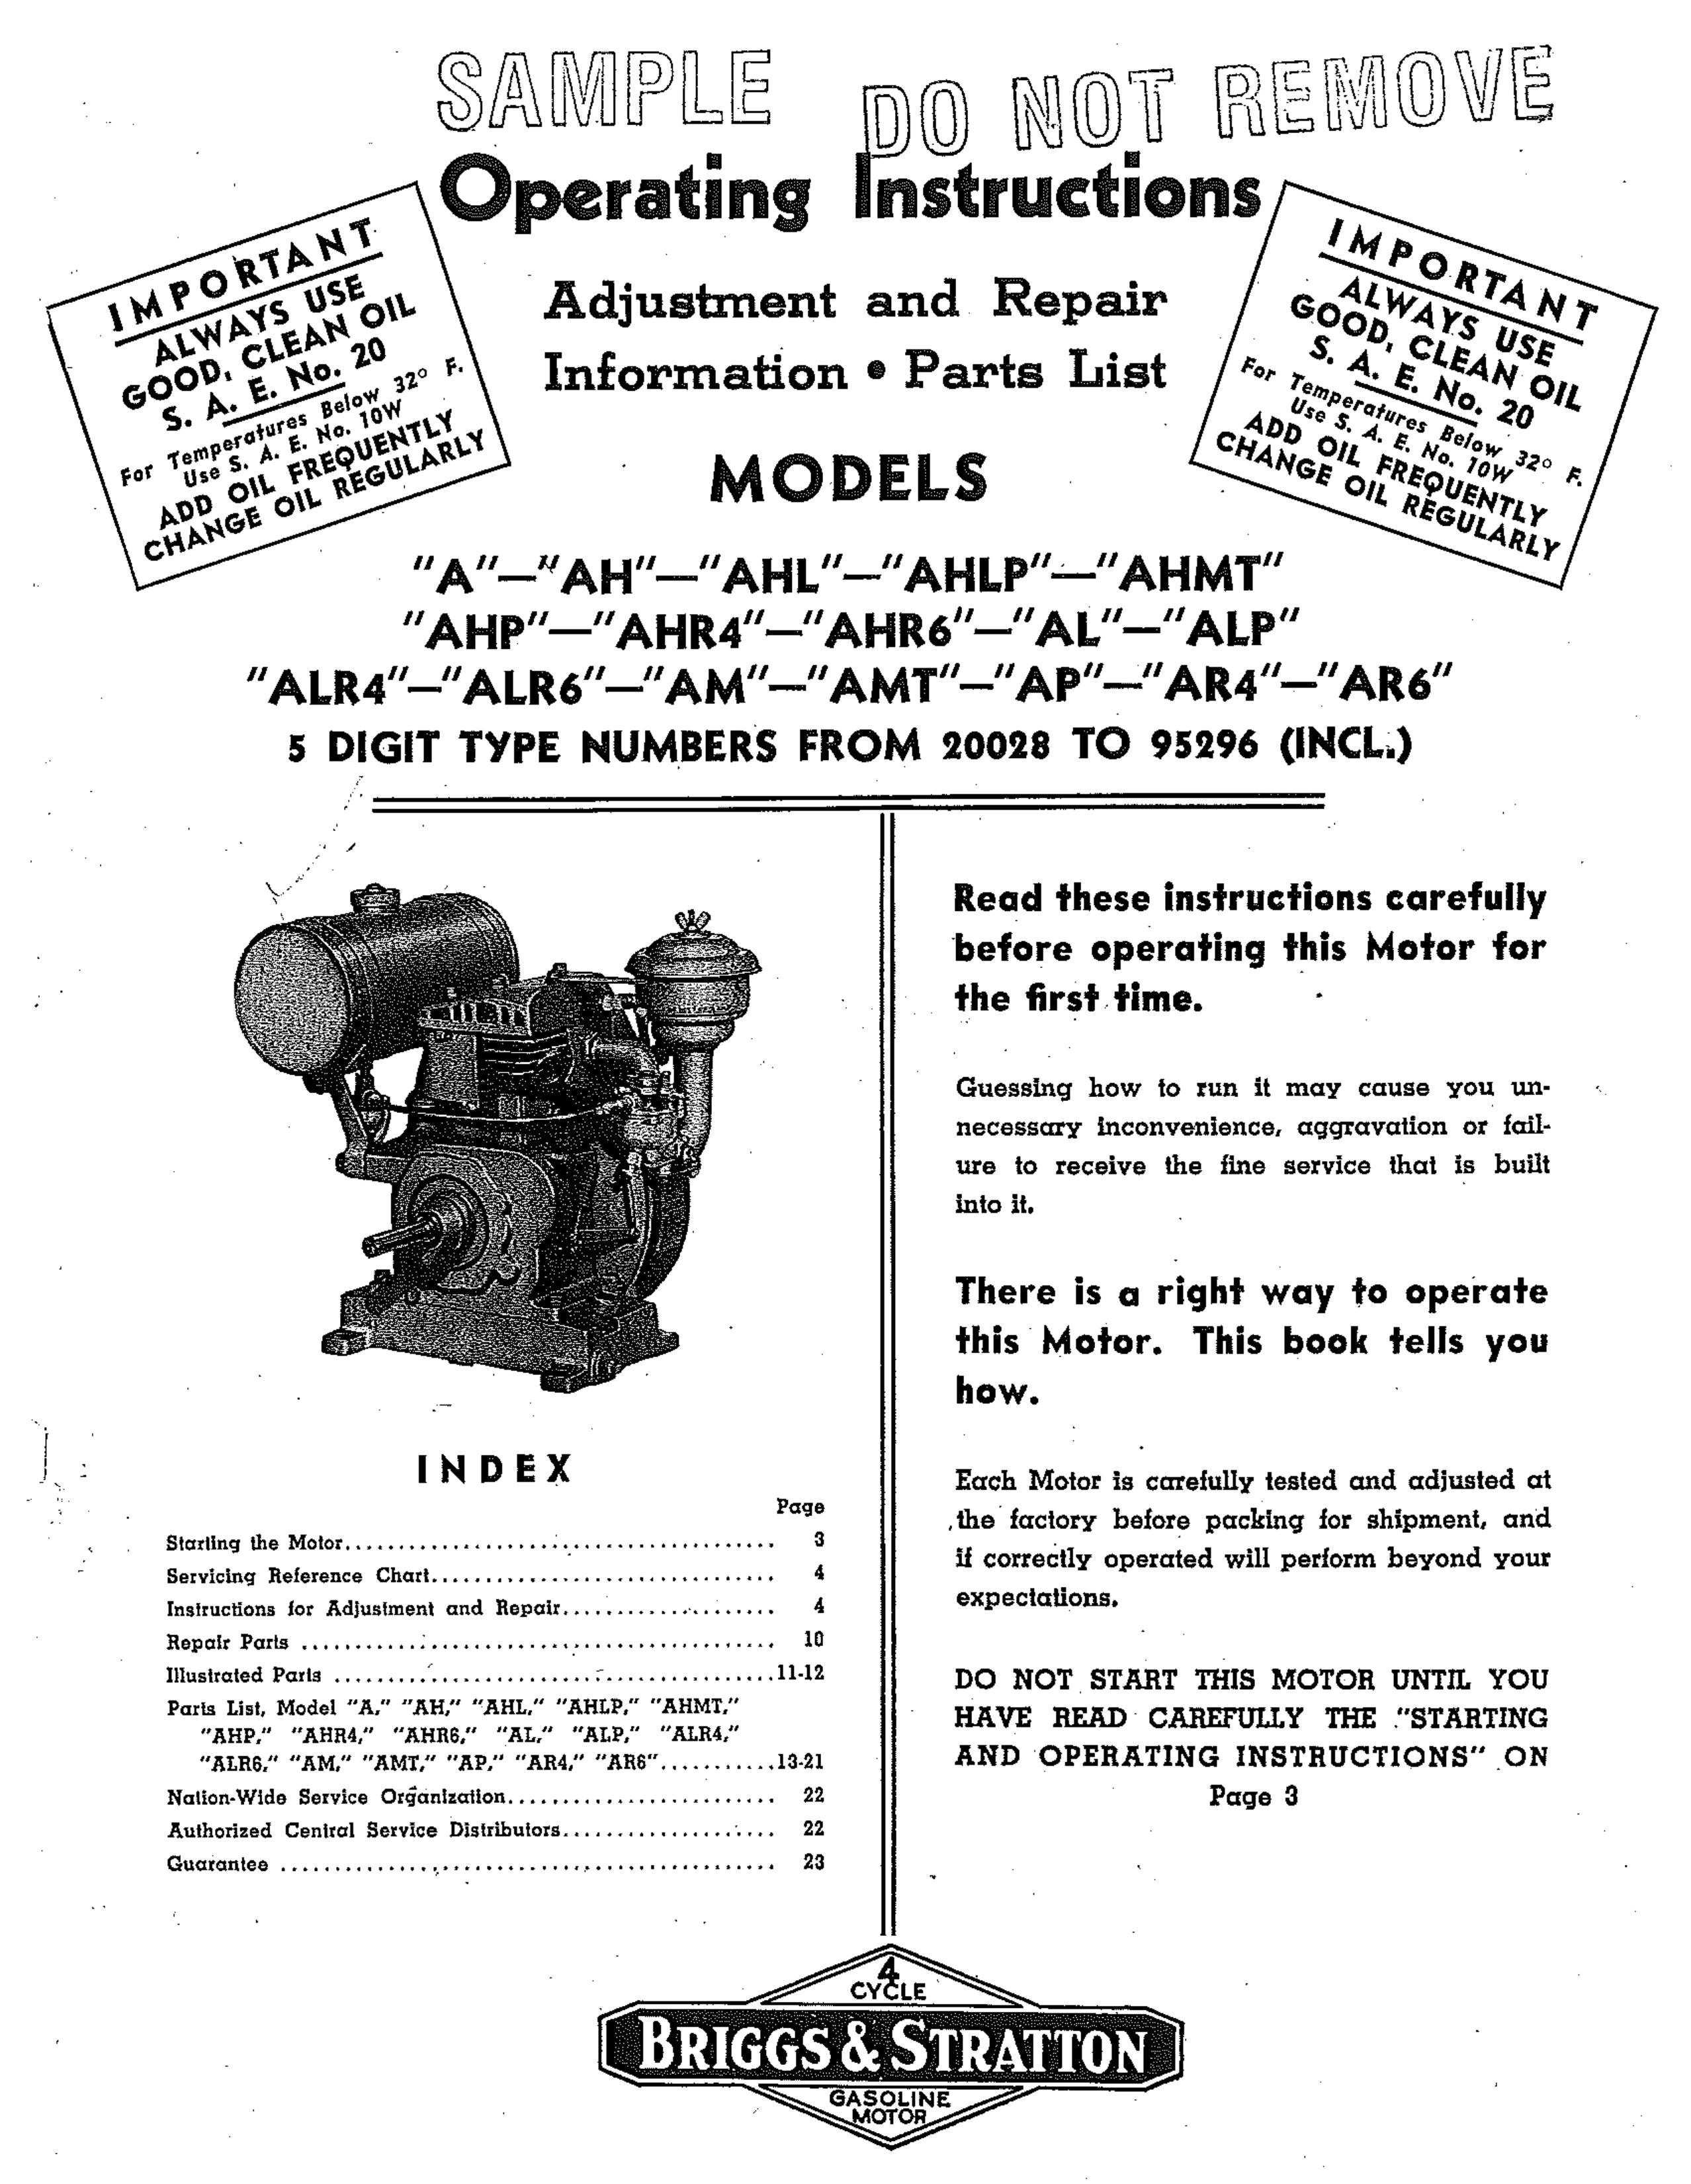 Briggs & Stratton AHLP Outboard Motor User Manual